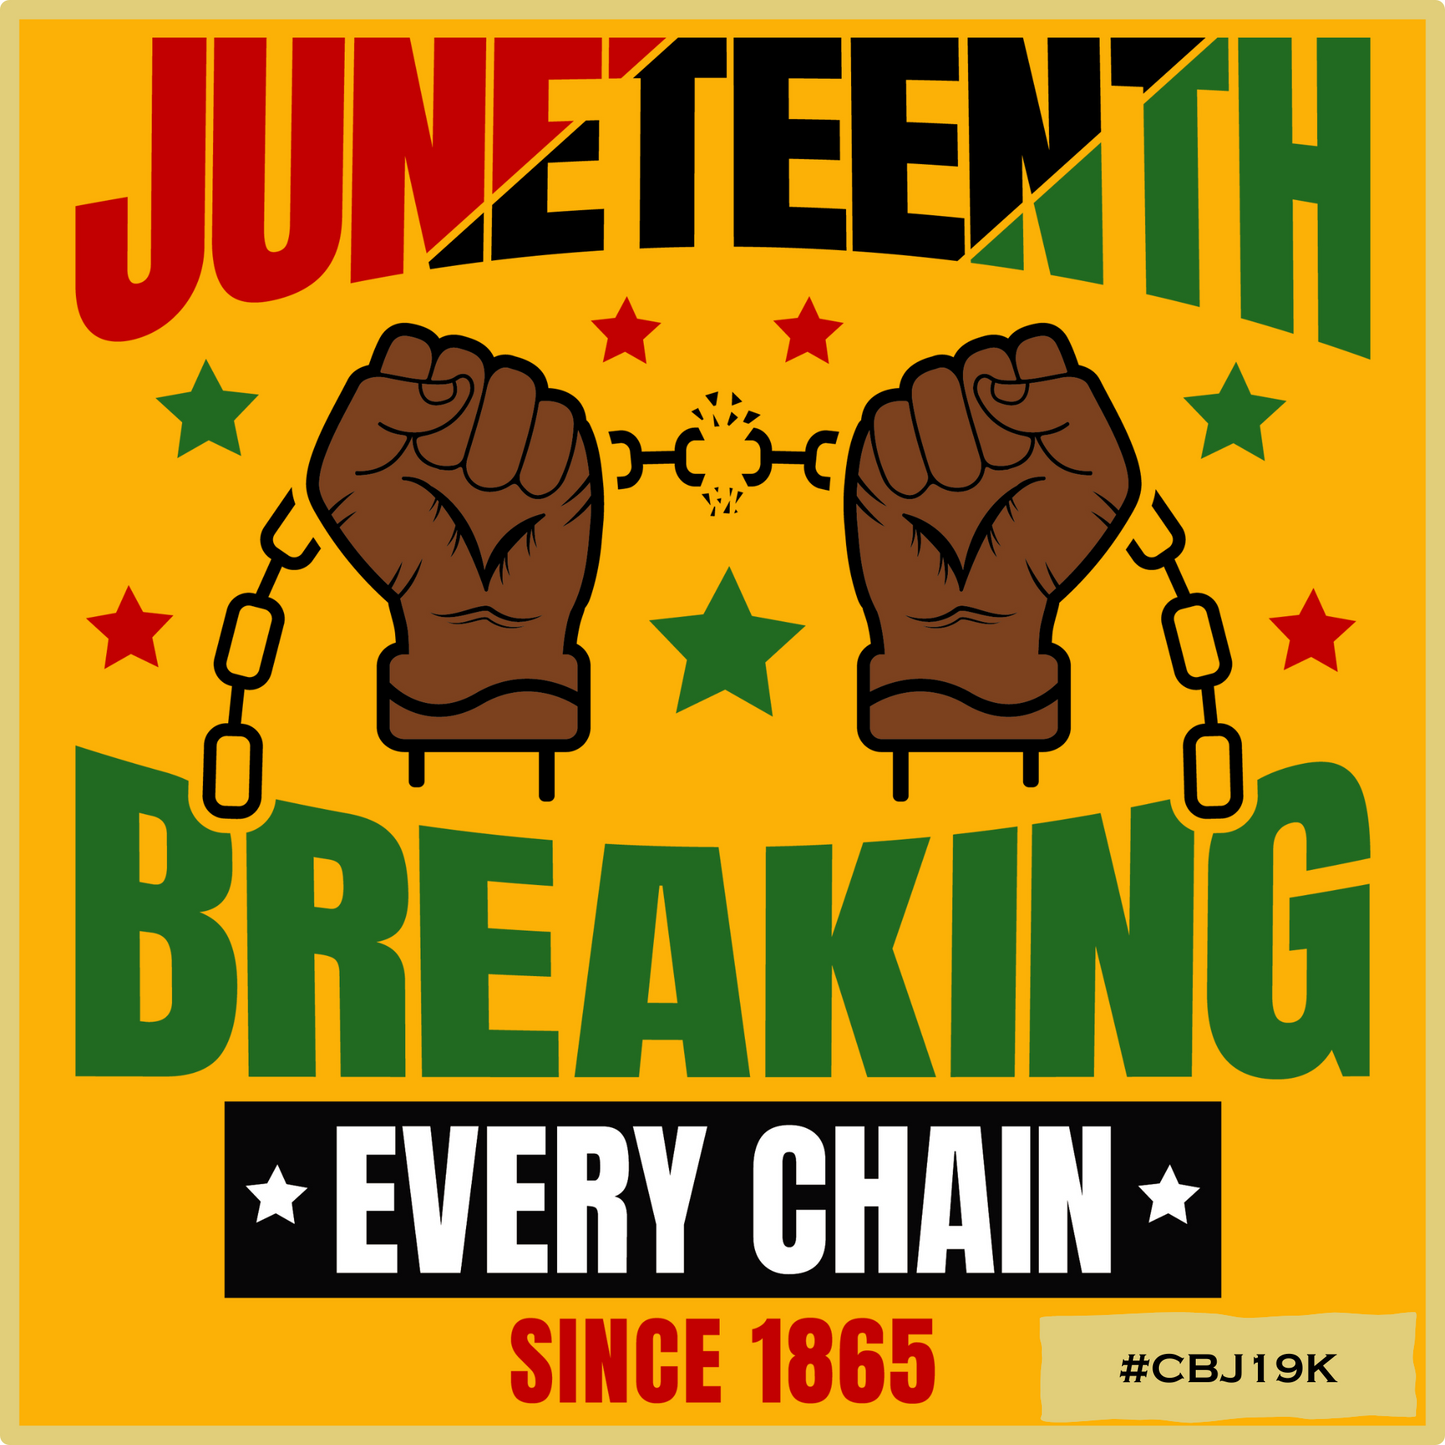 Breaking Every Chain